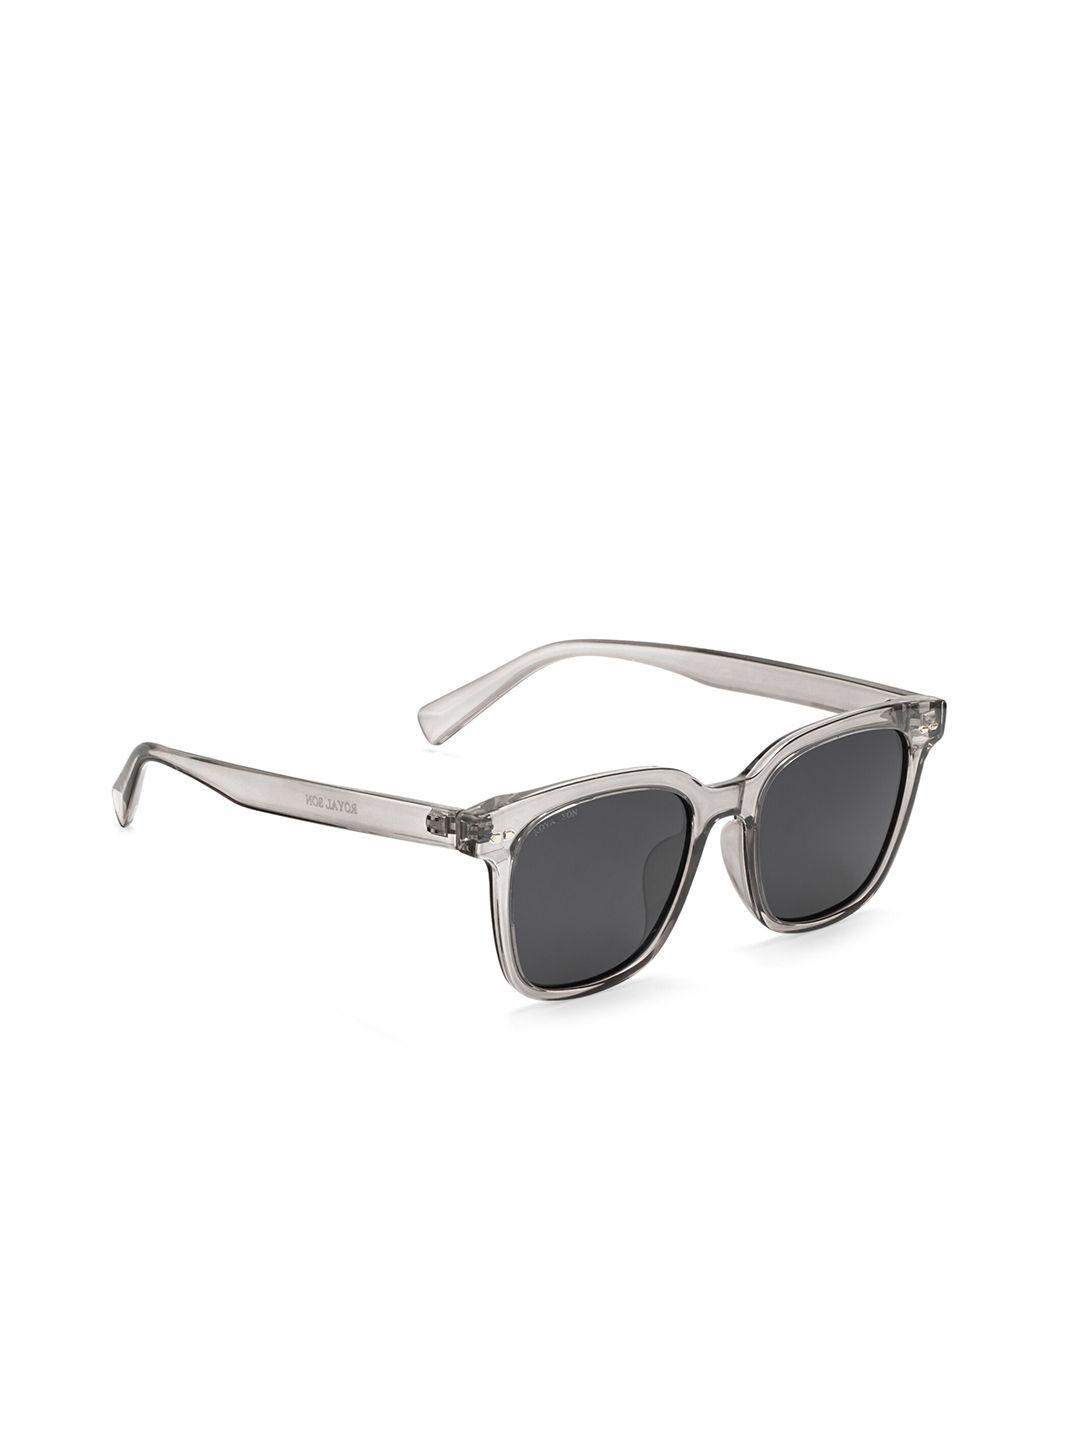 royal-son-square-sunglasses-with-polarised-lens-chi00127-c6-r1